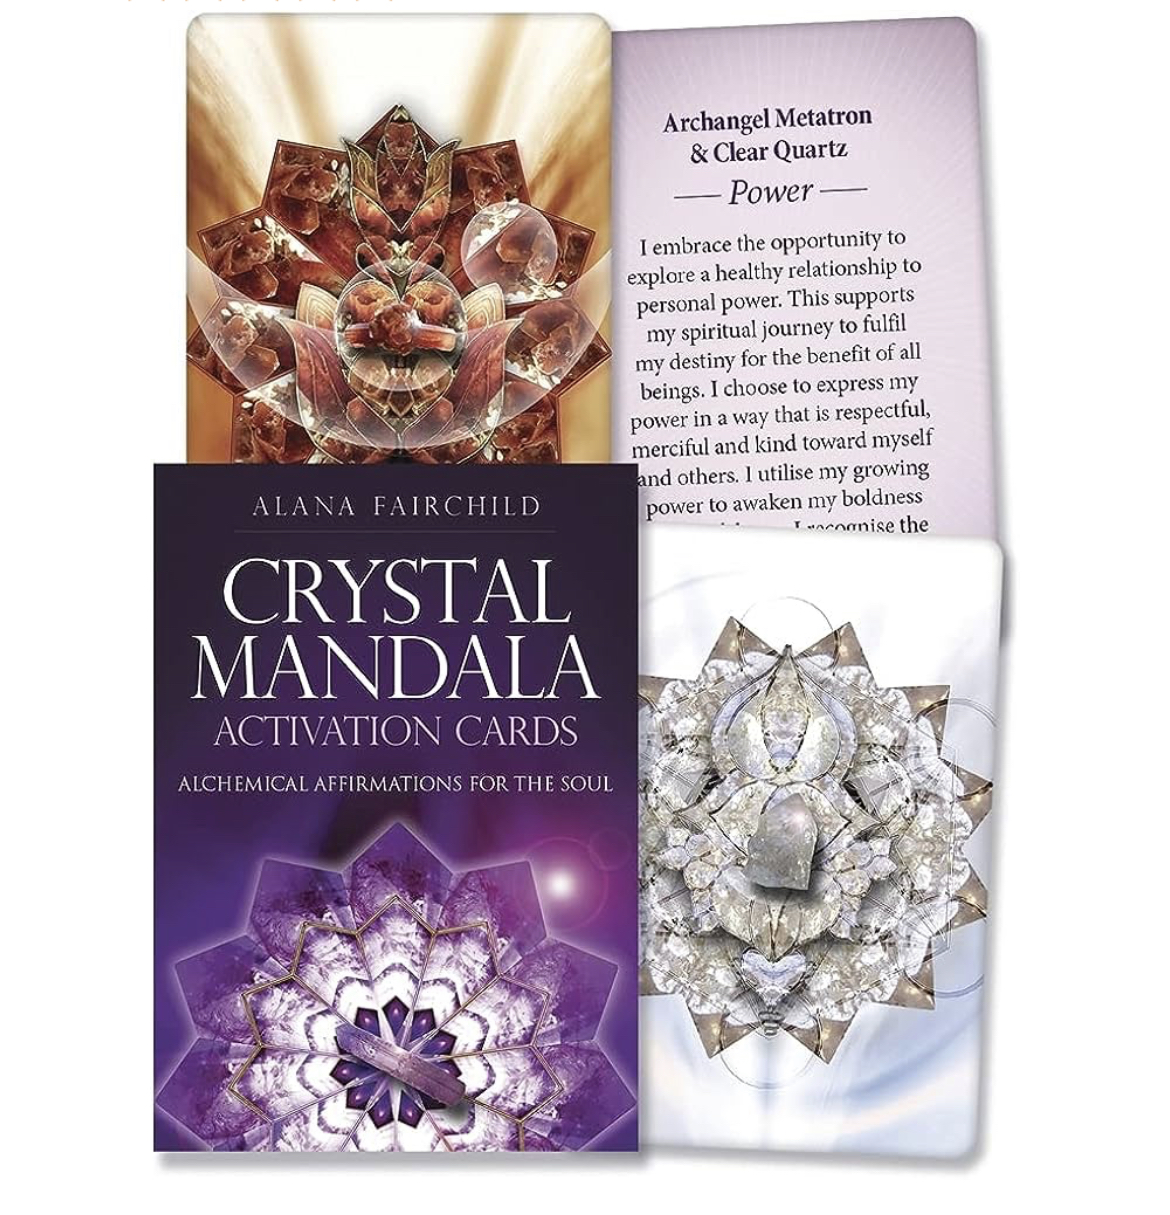 Crystal mandala activation cards